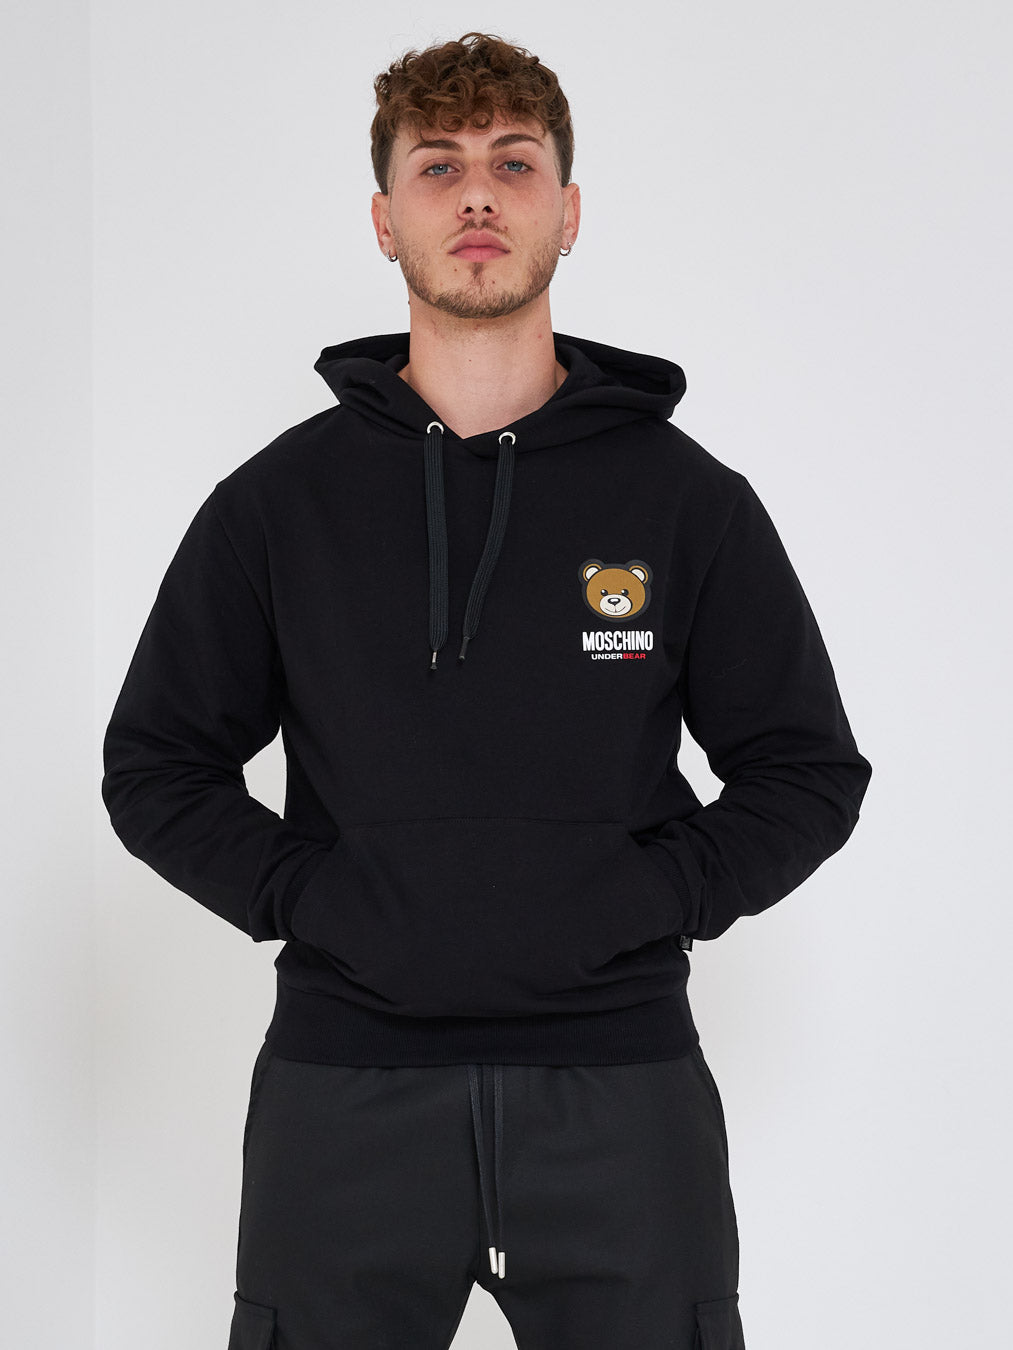 Moschino black sweatshirt with hood and bear print